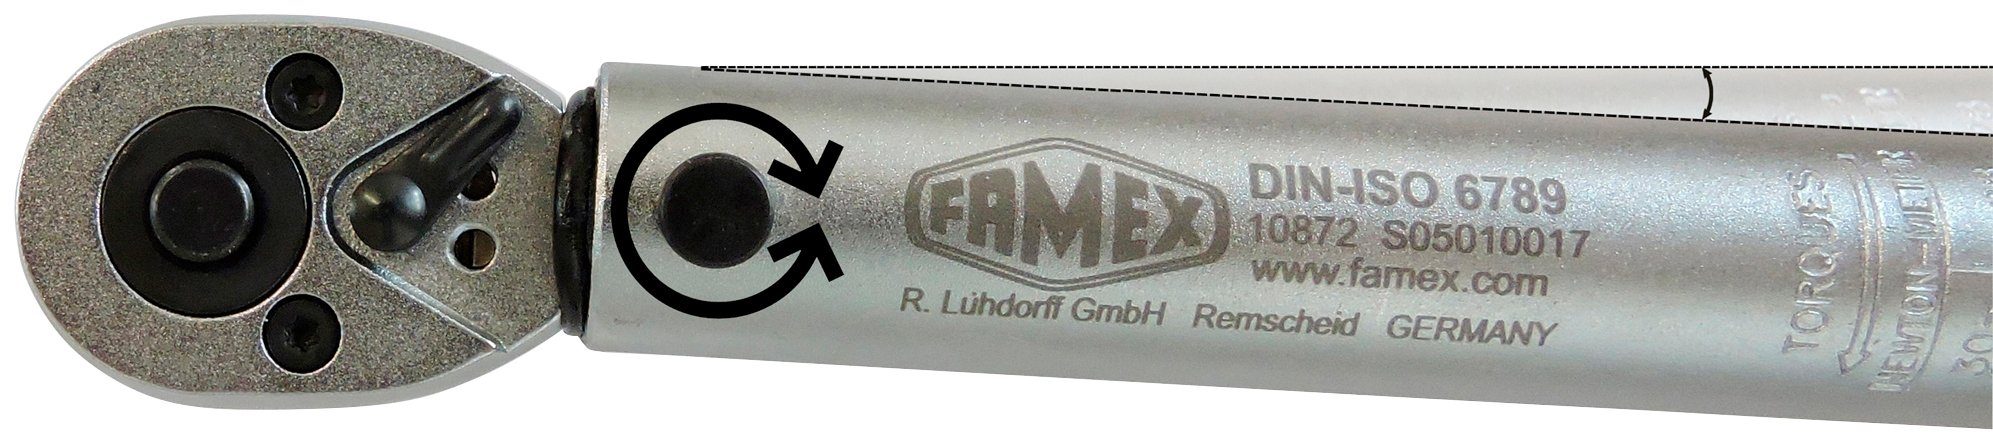 Pro FAMEX Drehmomentschlüssel R+L